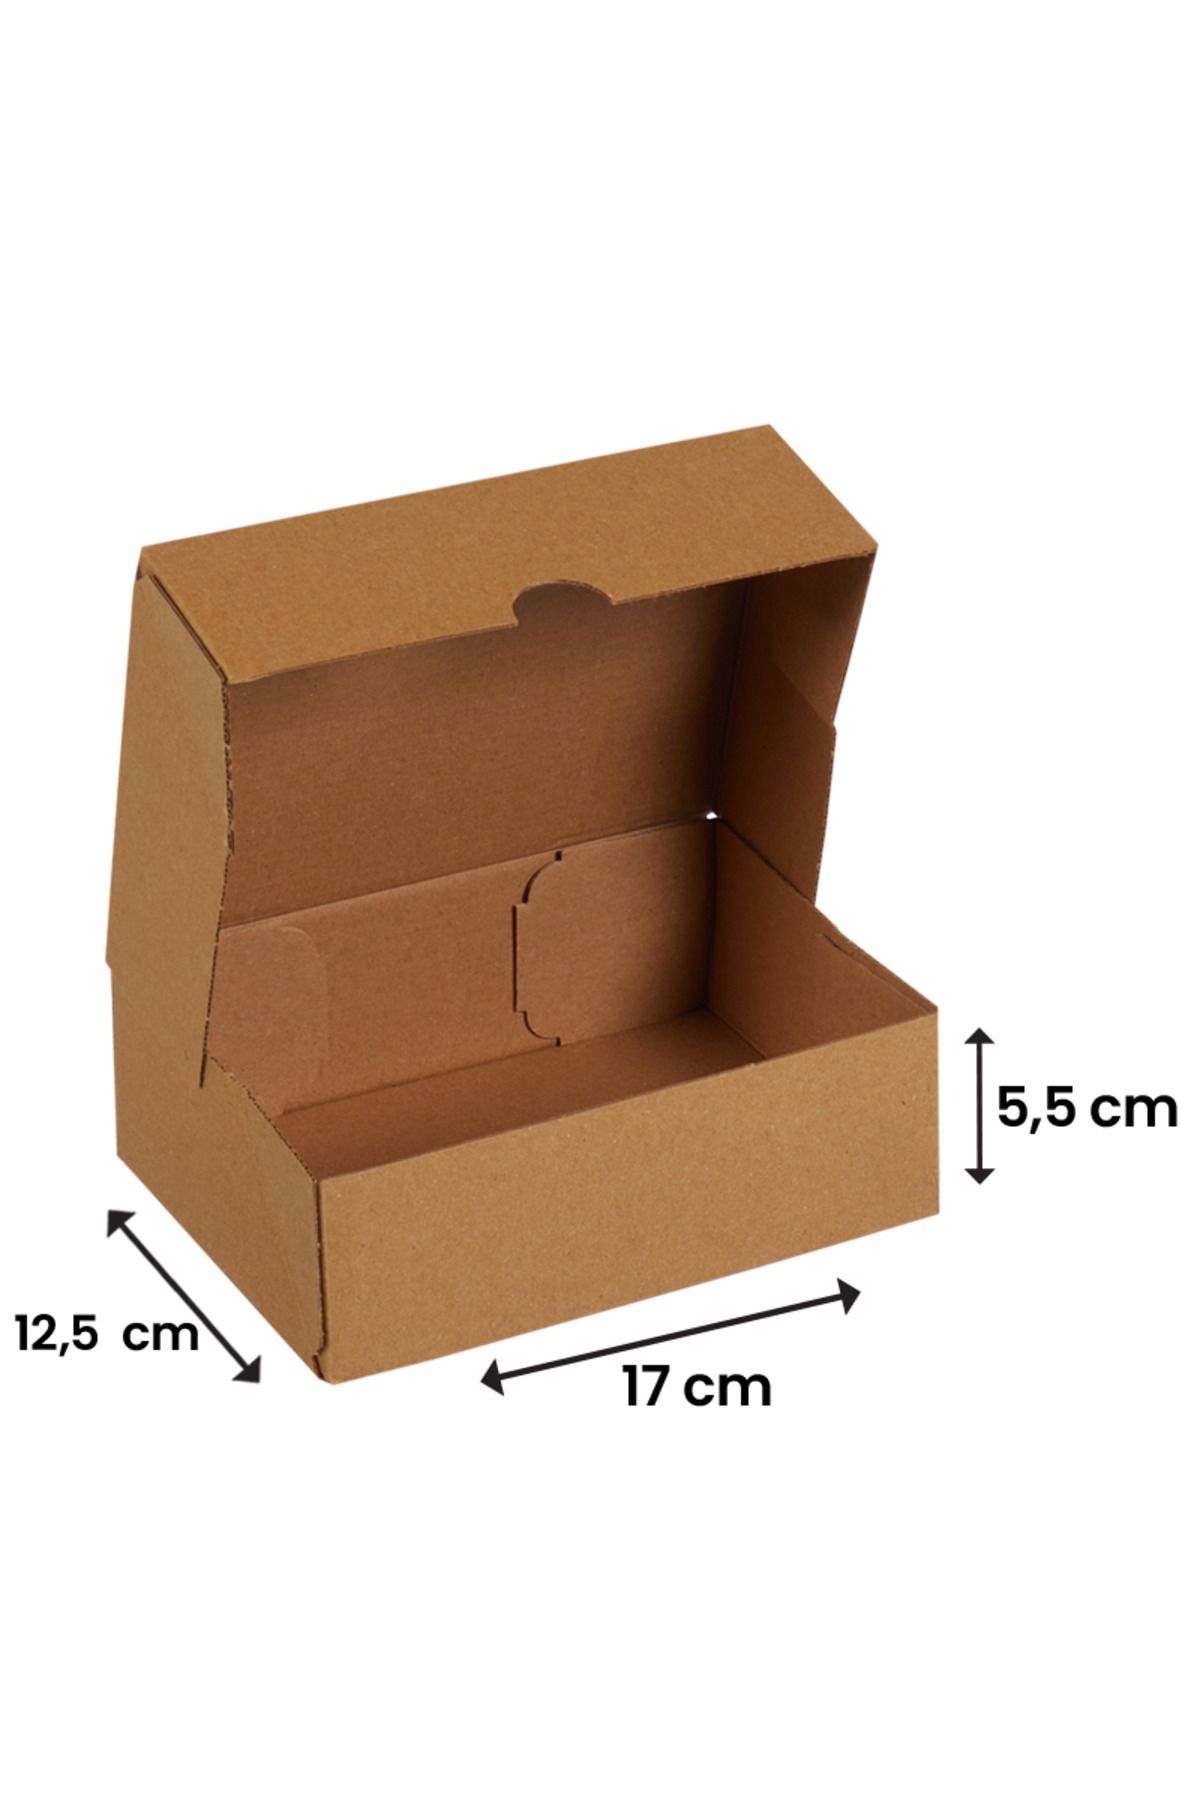 Packanya 17x12,5x5,5-25 Adet Kesimli Karton Kutu - Internet Ve Kargo Kutusu